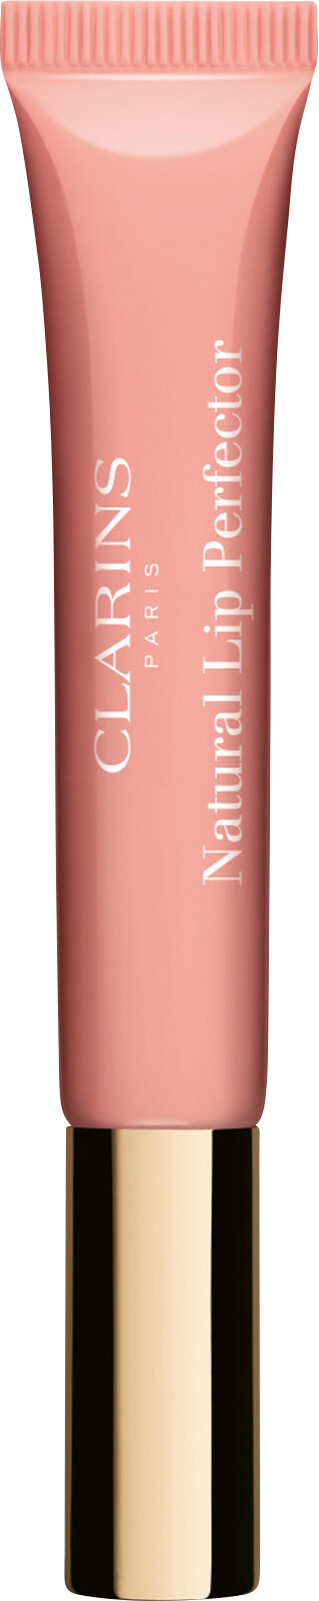 Clarins Natural Lip Perfector 12ml 02 - Apricot Shimmer